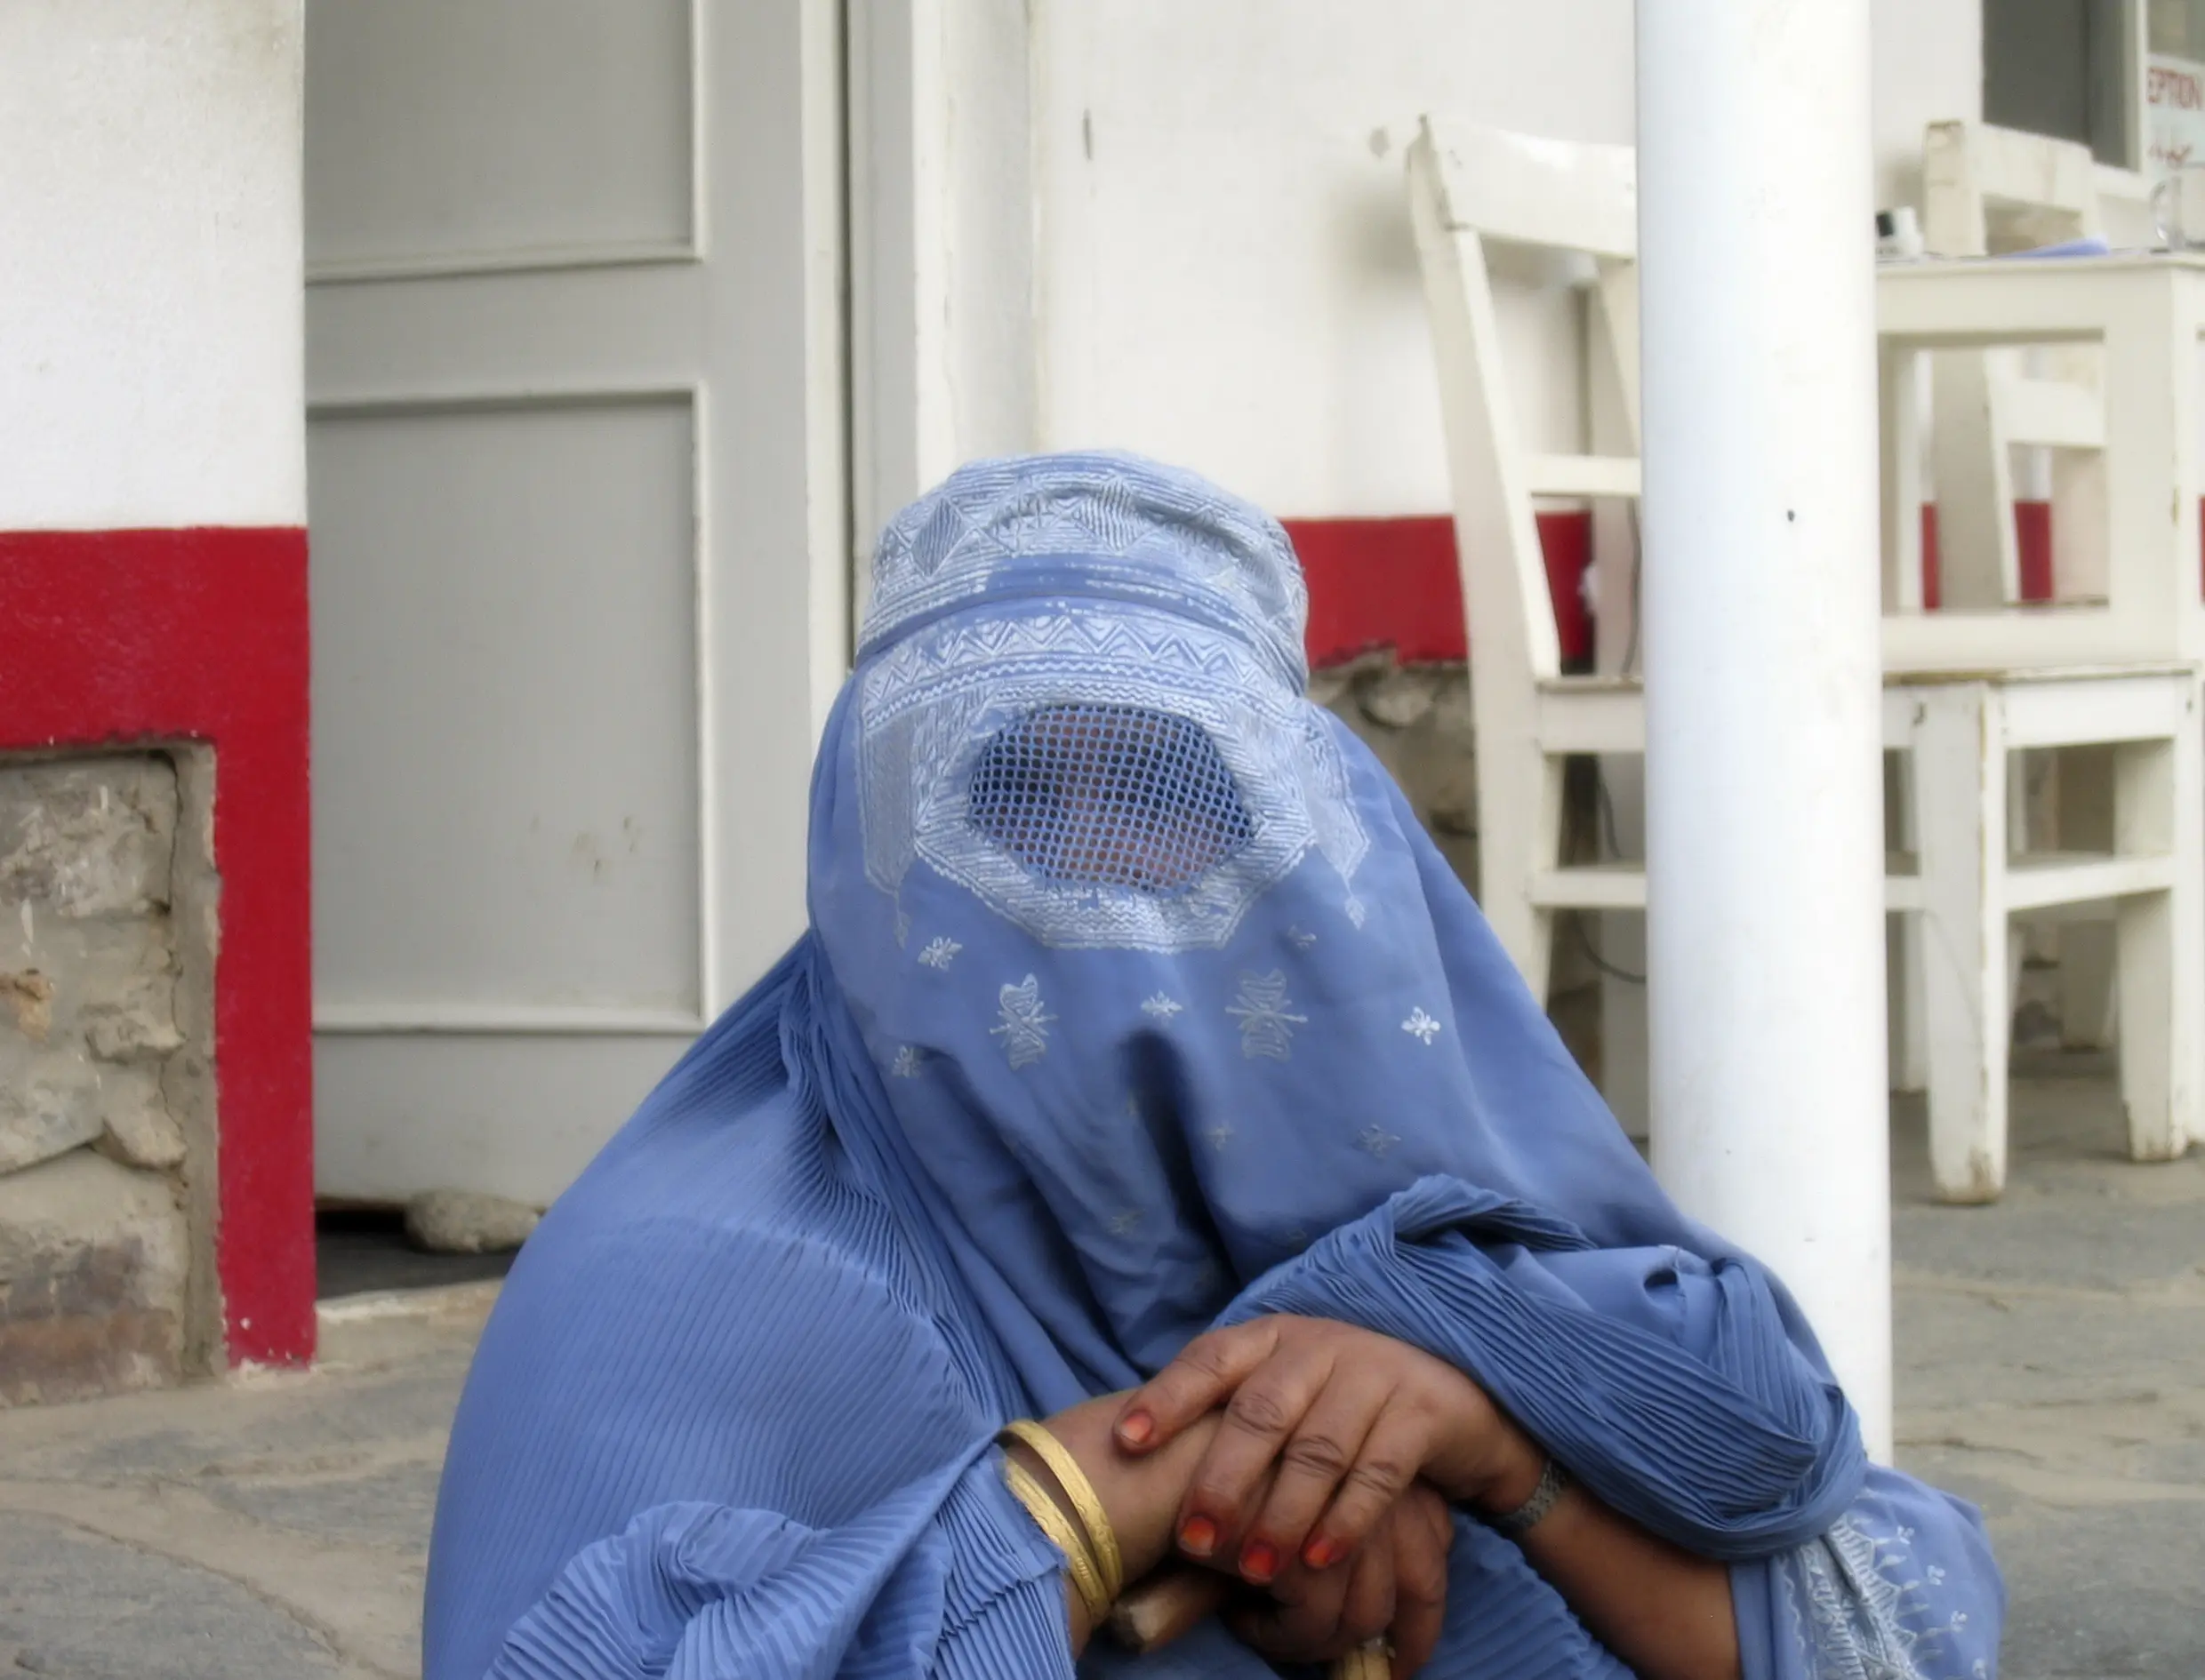 Mujer afgana con velo completo